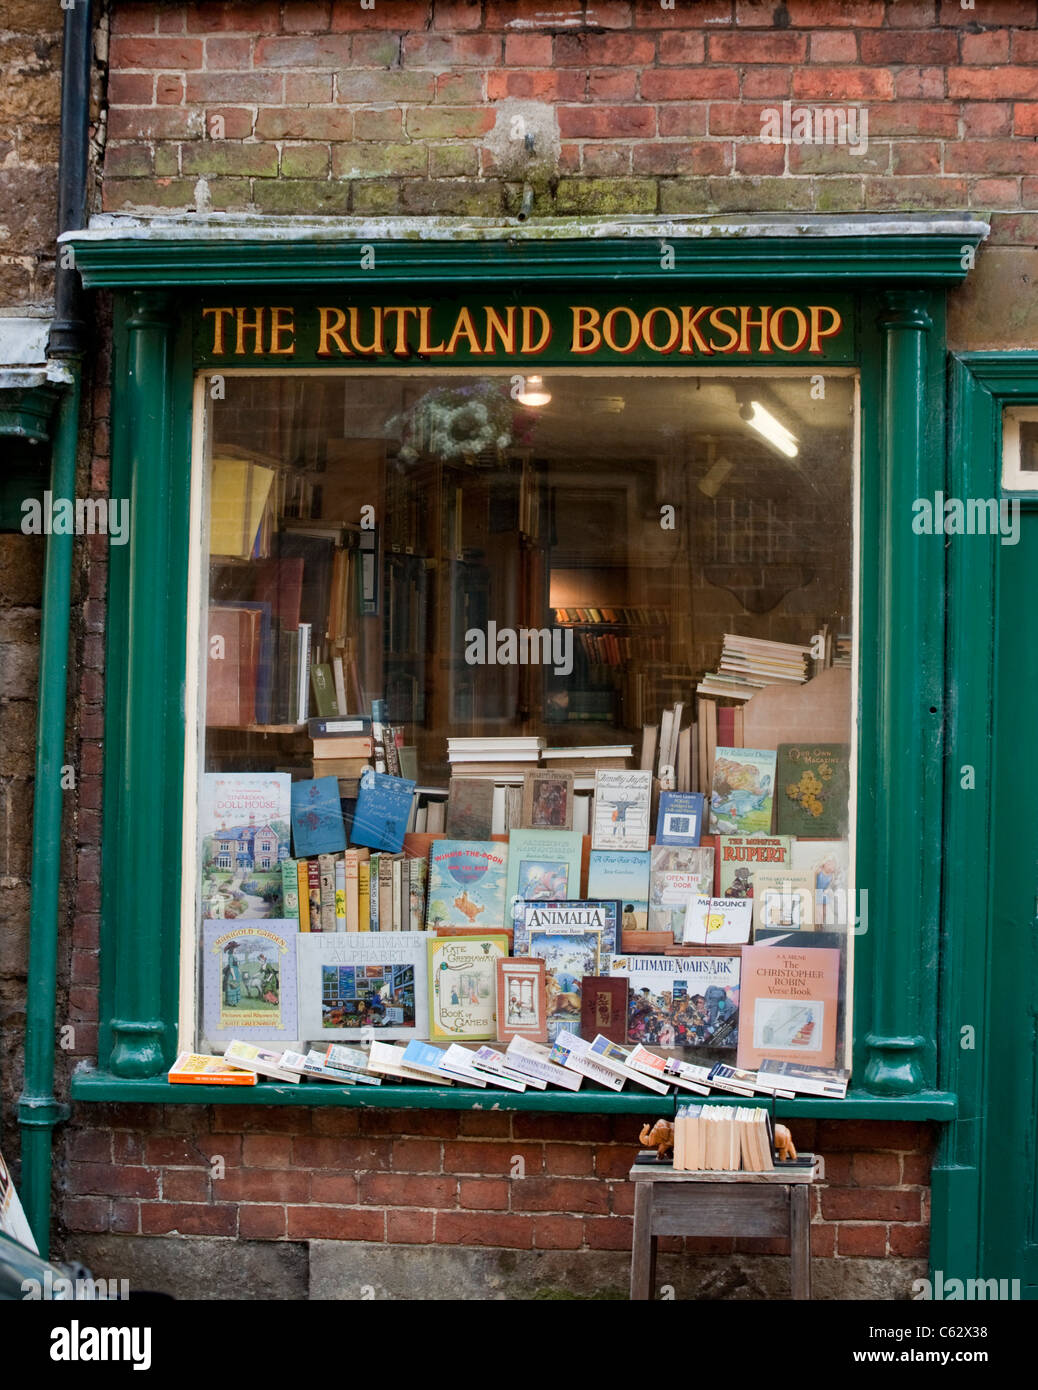 The Rutland Bookshop in Uppingham, Rutland, UK Stock Photo